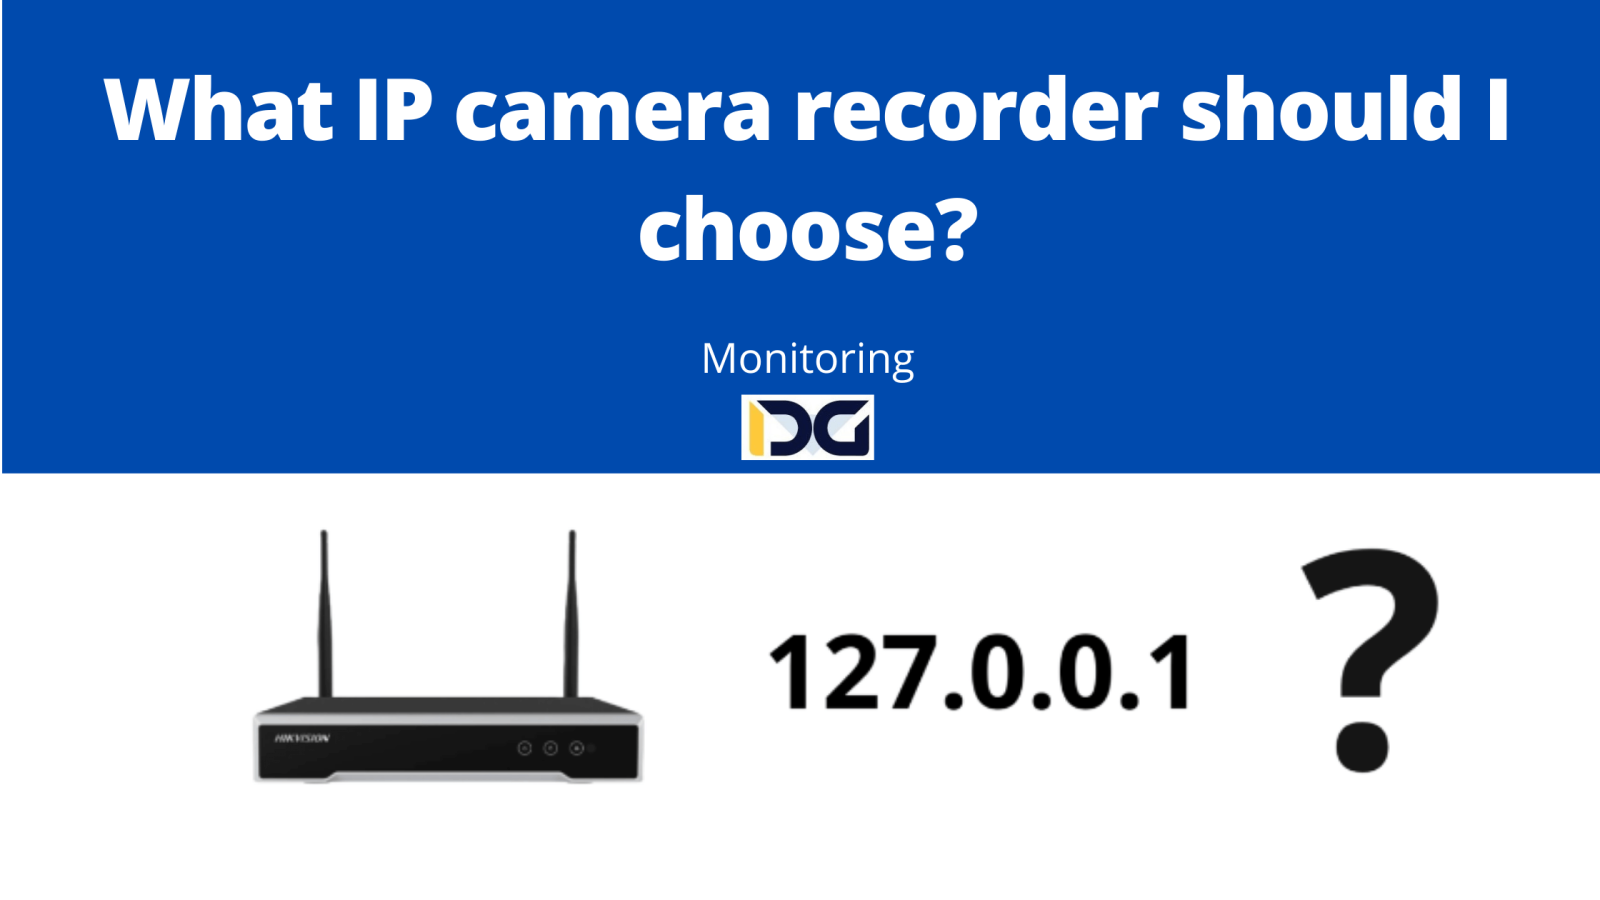 What IP camera recorder should I choose?